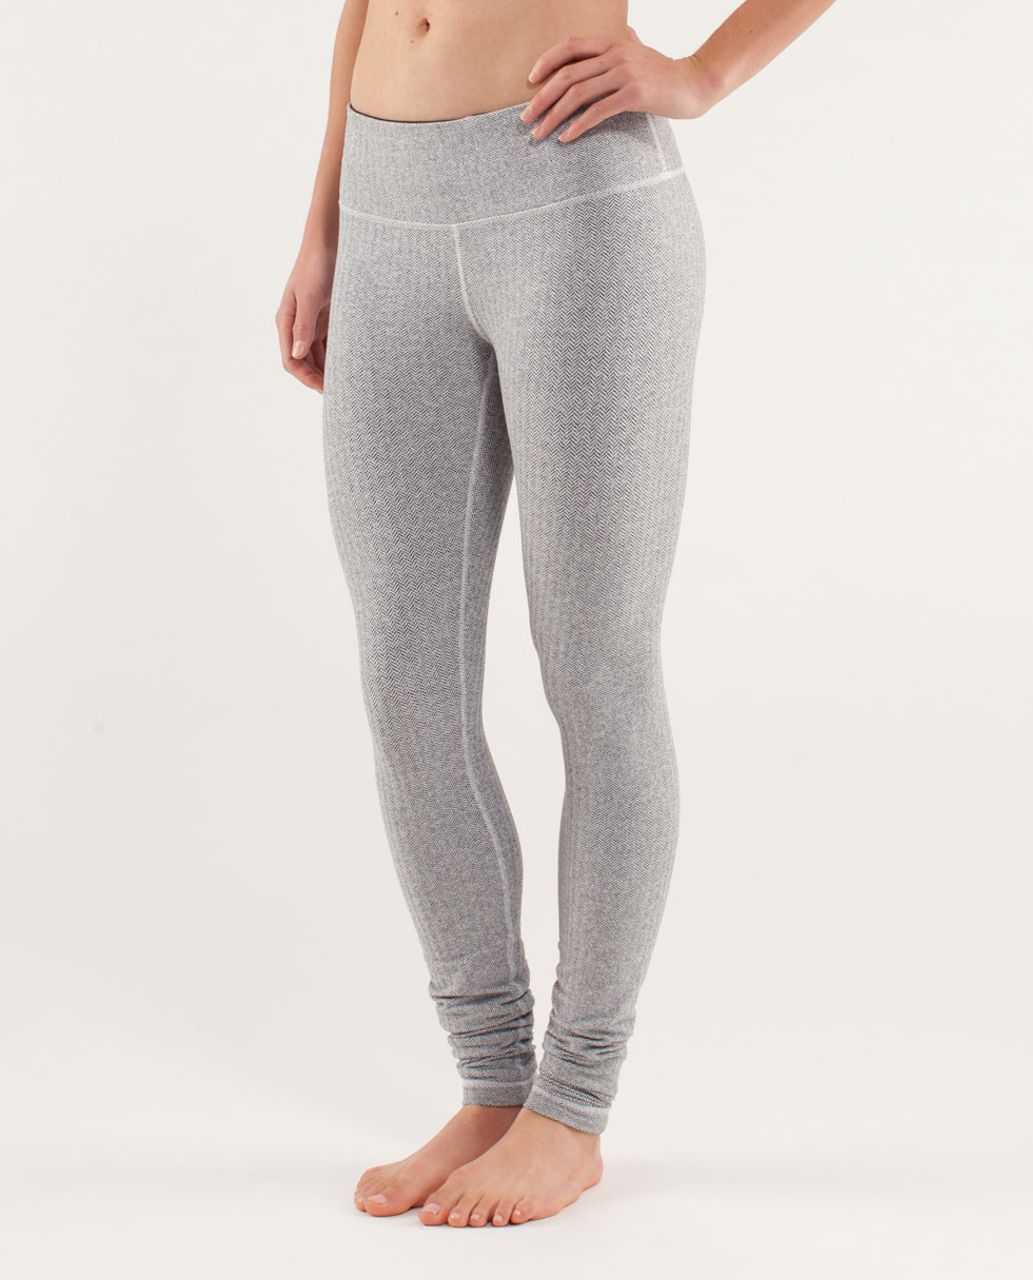 Lululemon size 2 yoga pants, houndstooth gray